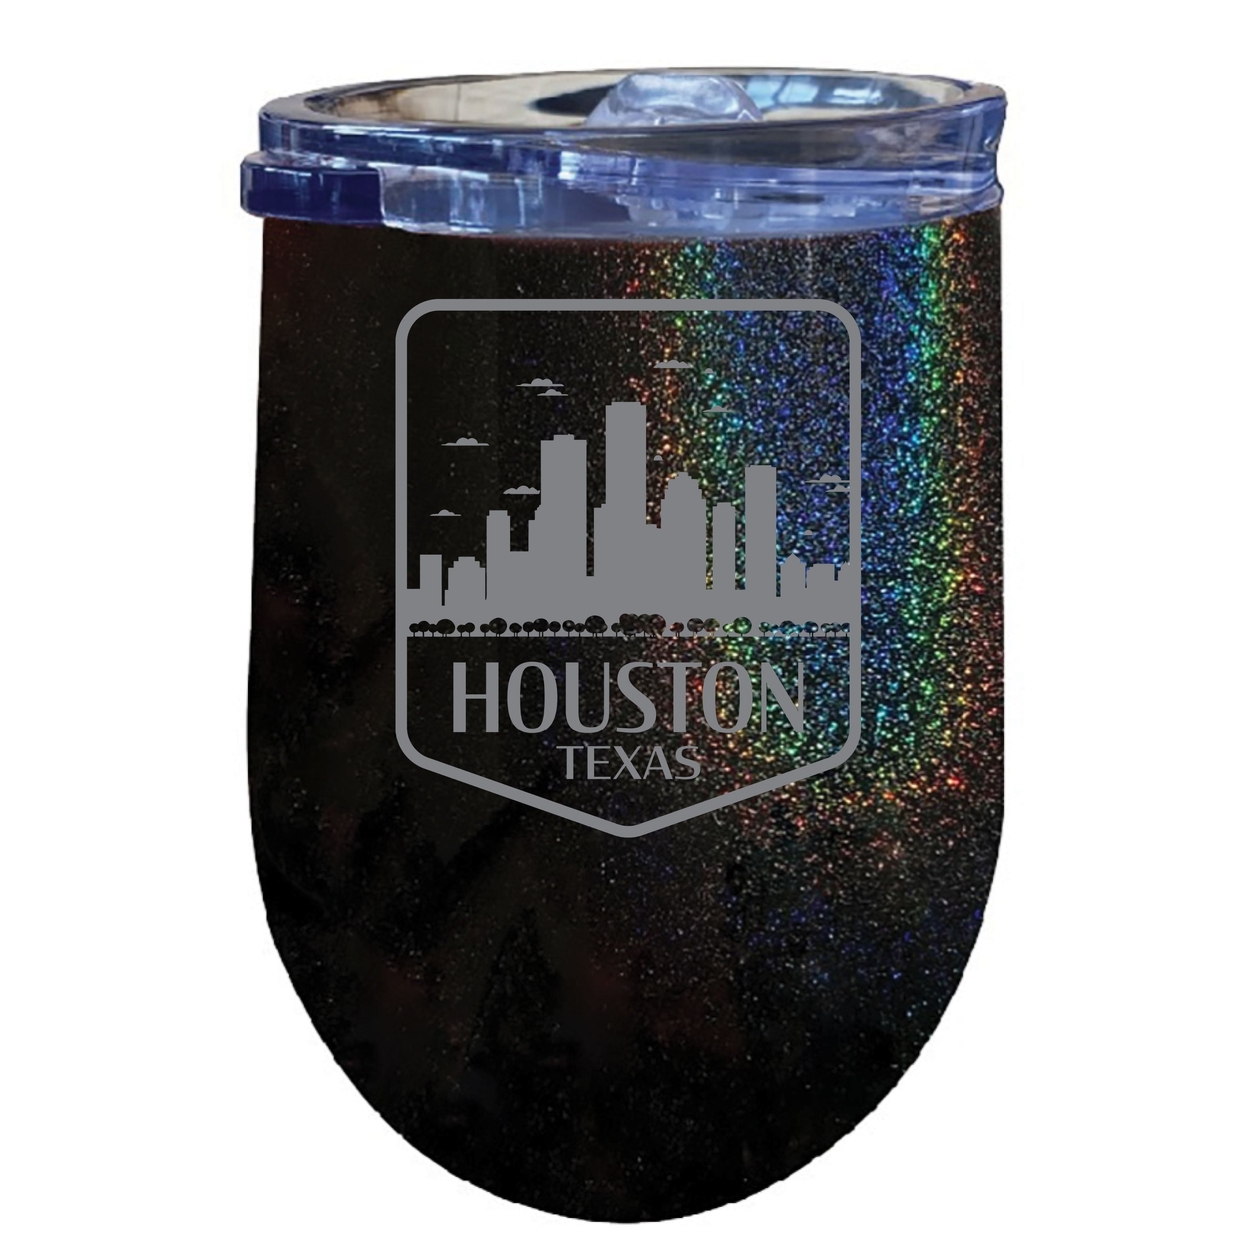 Houston Texas Souvenir 12 Oz Engraved Insulated Wine Stainless Steel Tumbler - Seafoam,,2-Pack